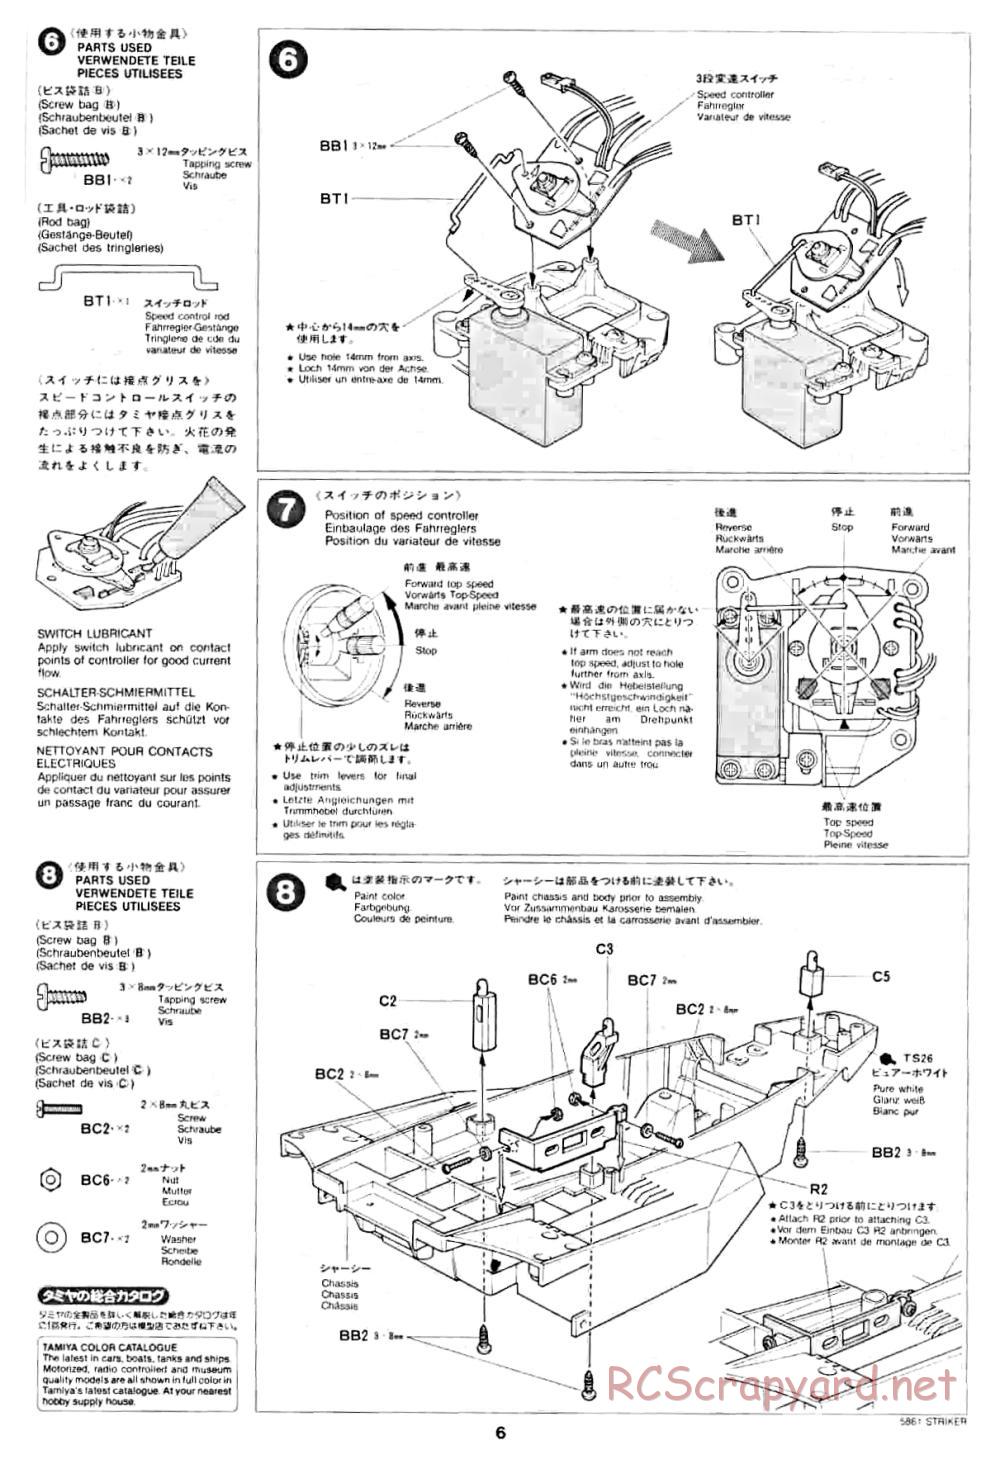 Tamiya - Striker - 58061 - Manual - Page 6